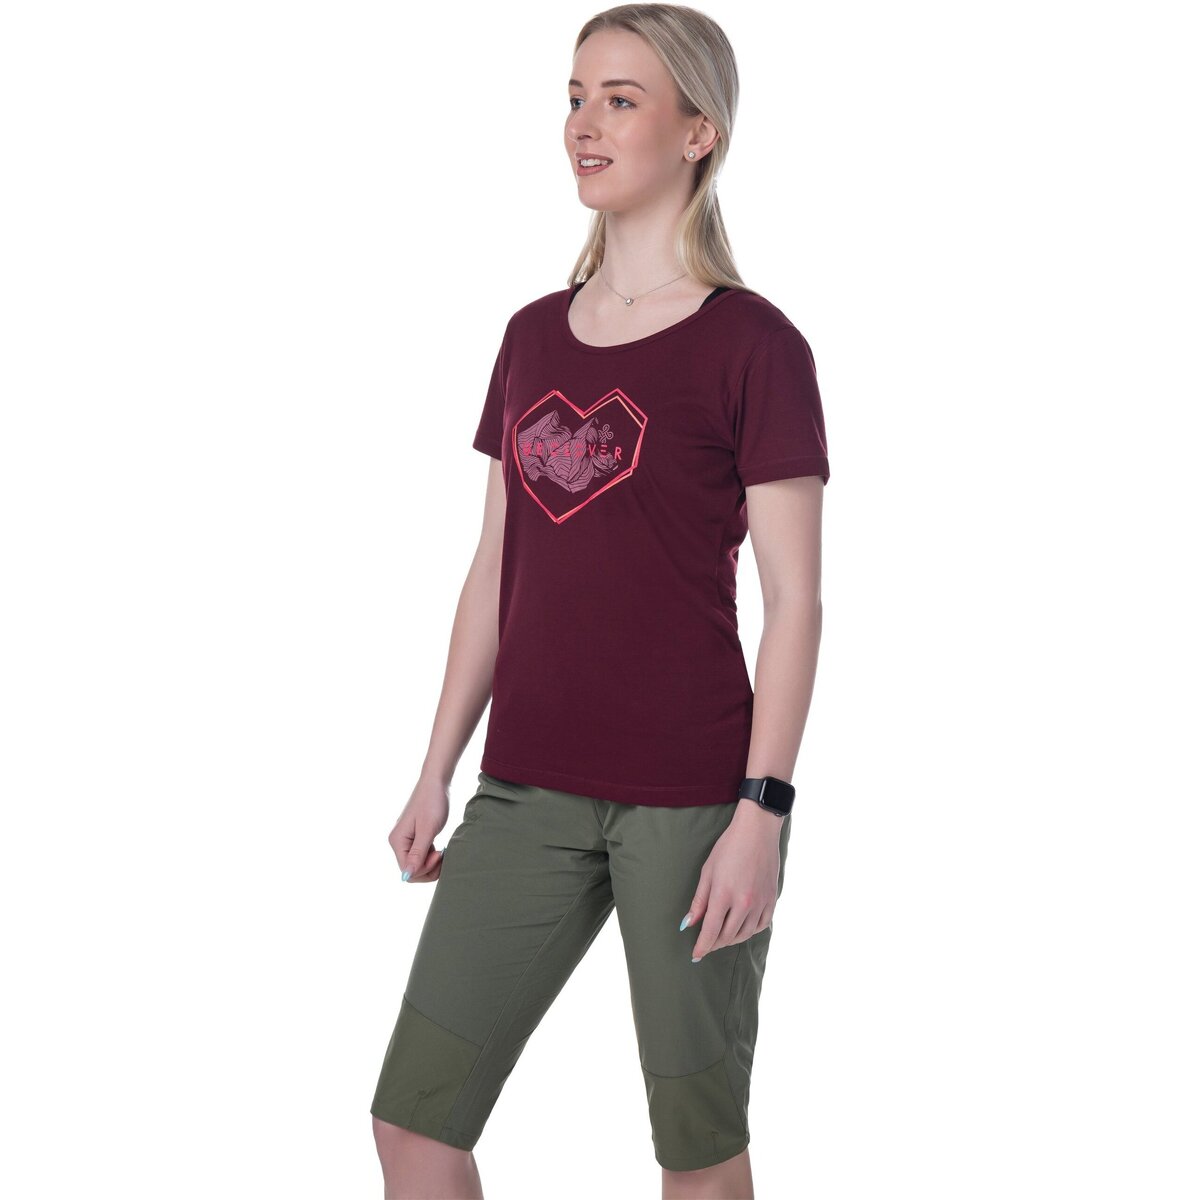 Kilpi Rouge T-shirt randonnée femme GAROVE-W qN0lPF9H